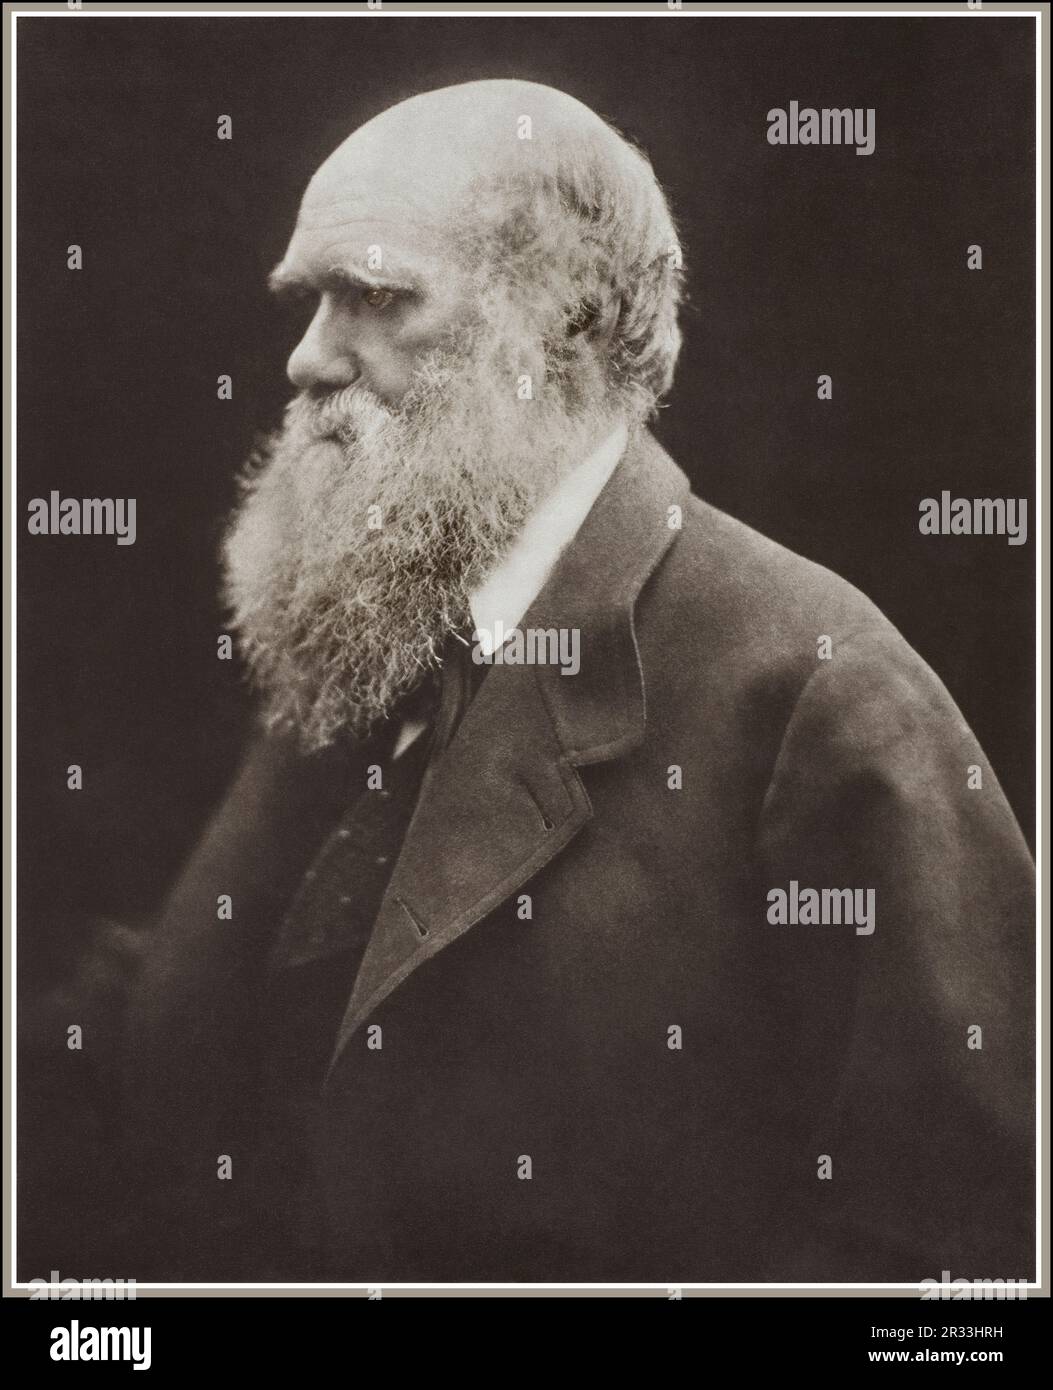 Charles Darwin portrait by the celebrated Victorian photographer artist Julia Margaret Cameron, c. 1868. Stock Photo